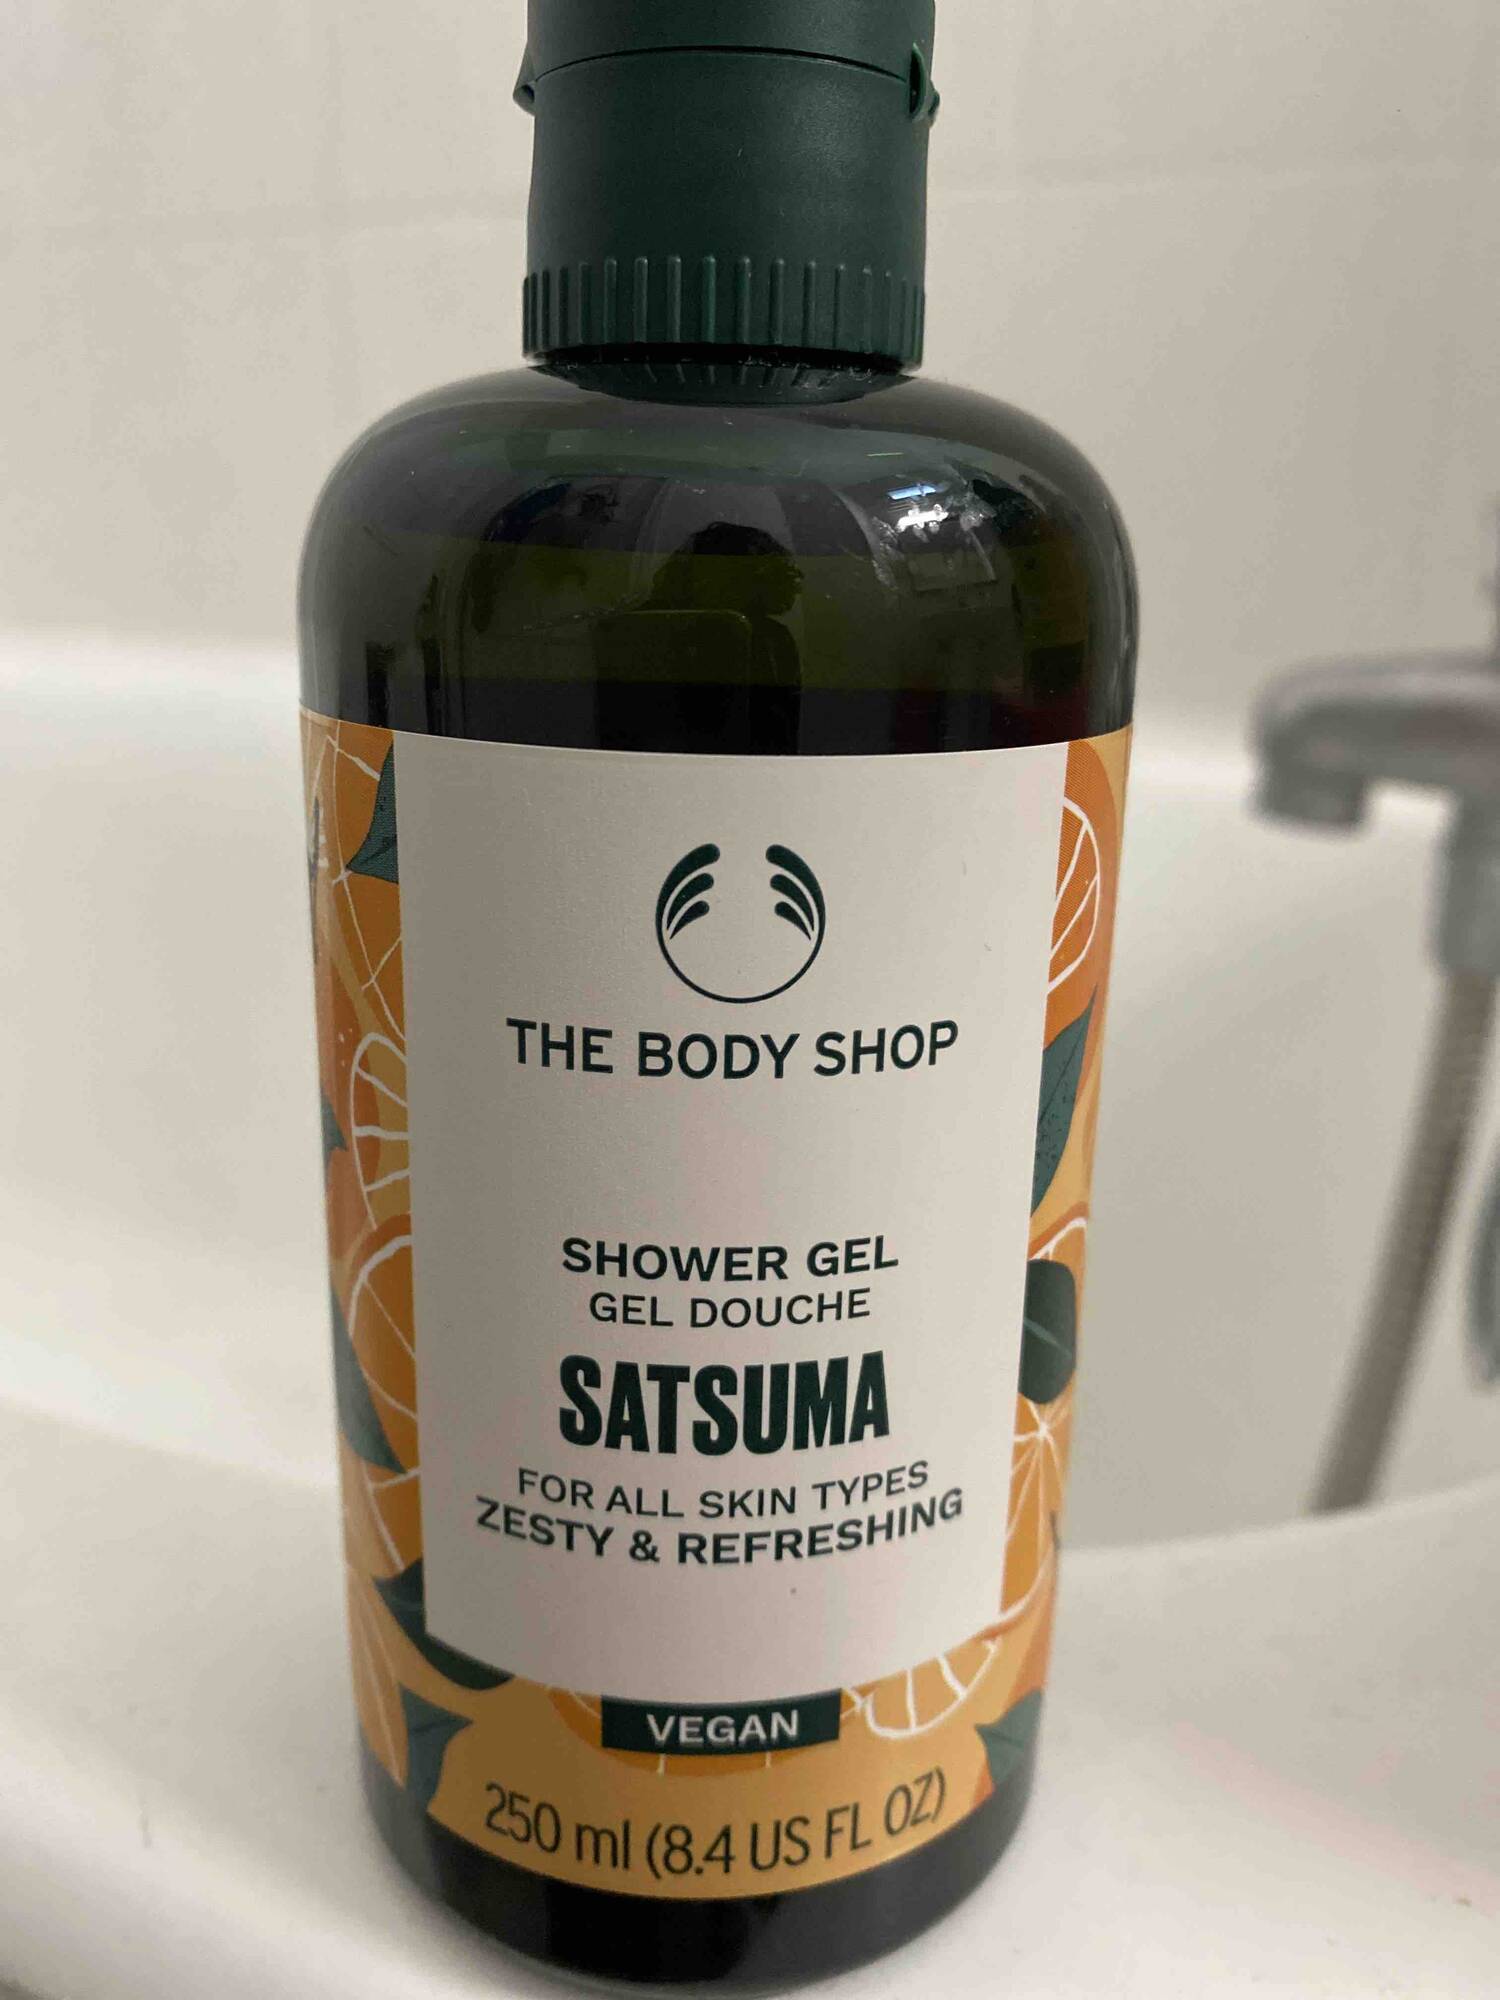 THE BODY SHOP - Satsuma - gel douche